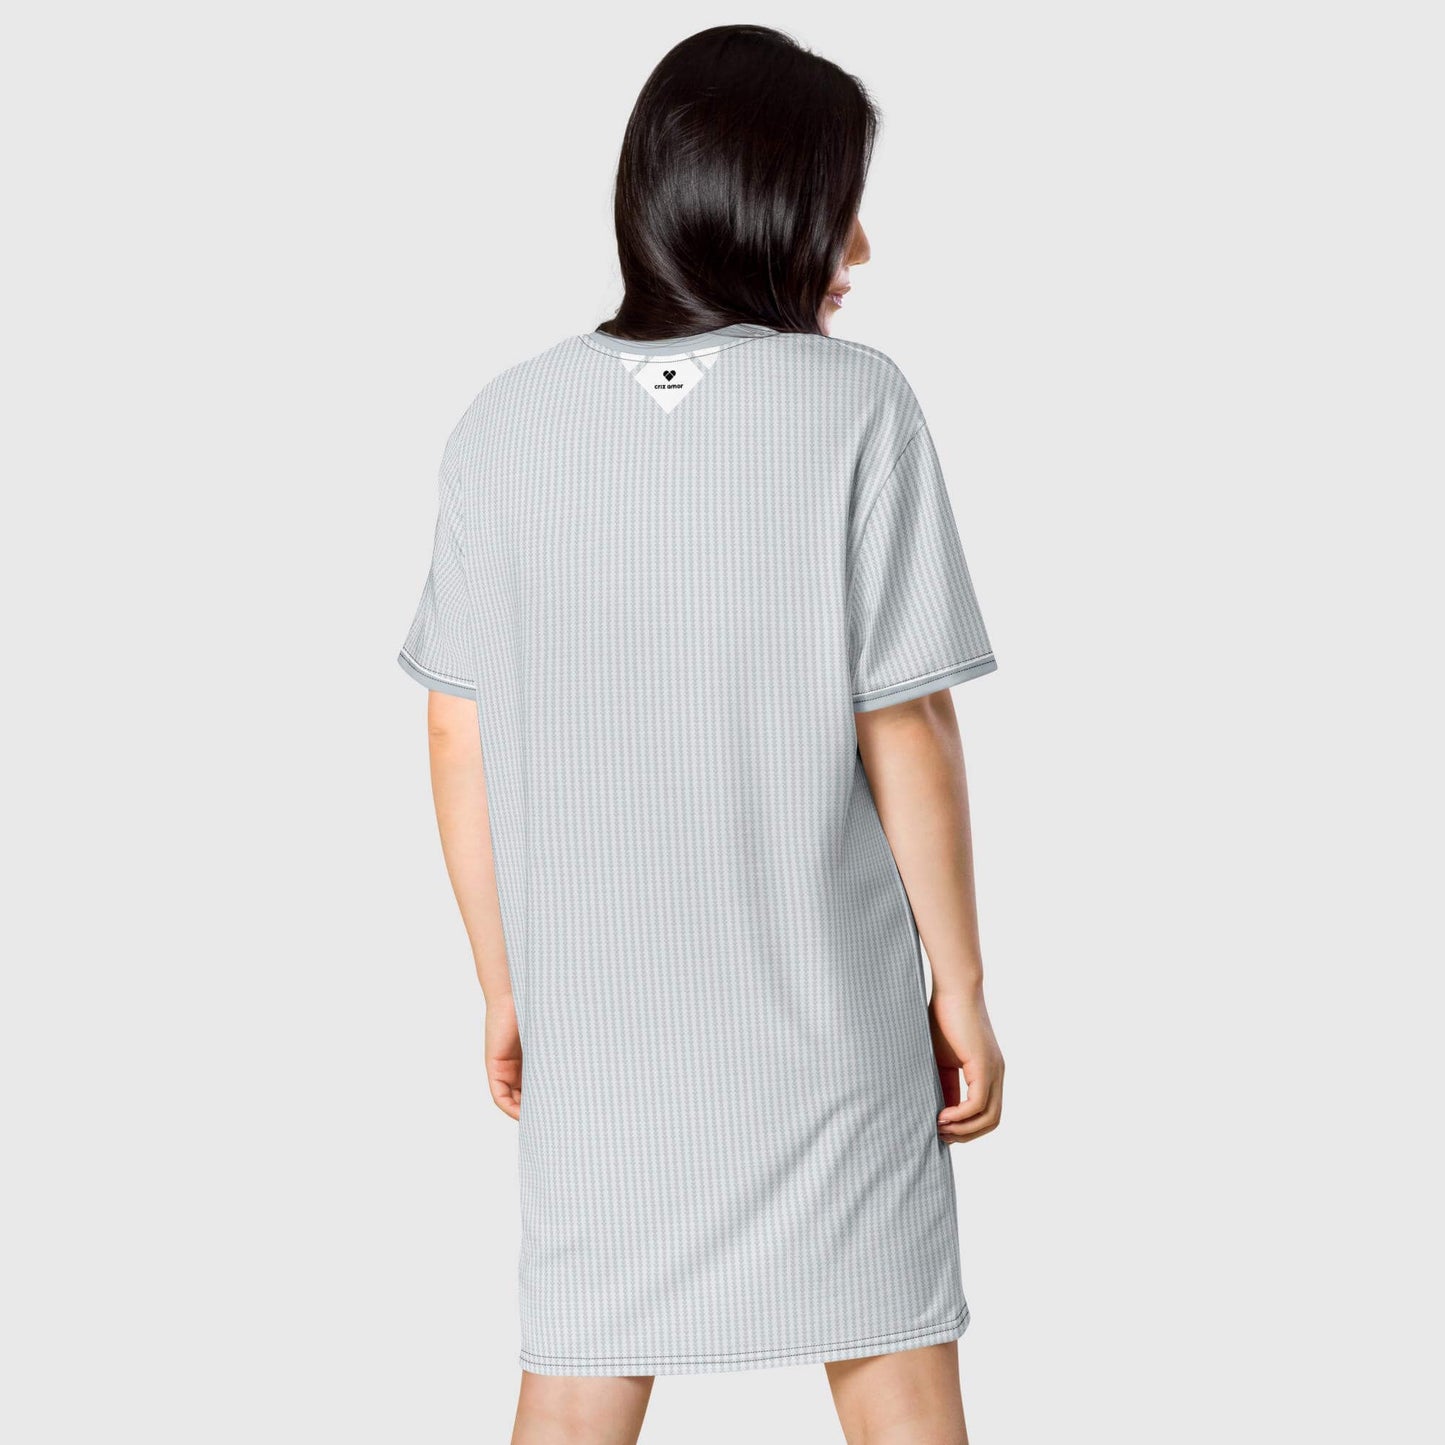 Fashion-forward light gray Lovogram Shirt Dress for Gen Z and millennials by CRiZ AMOR - back view